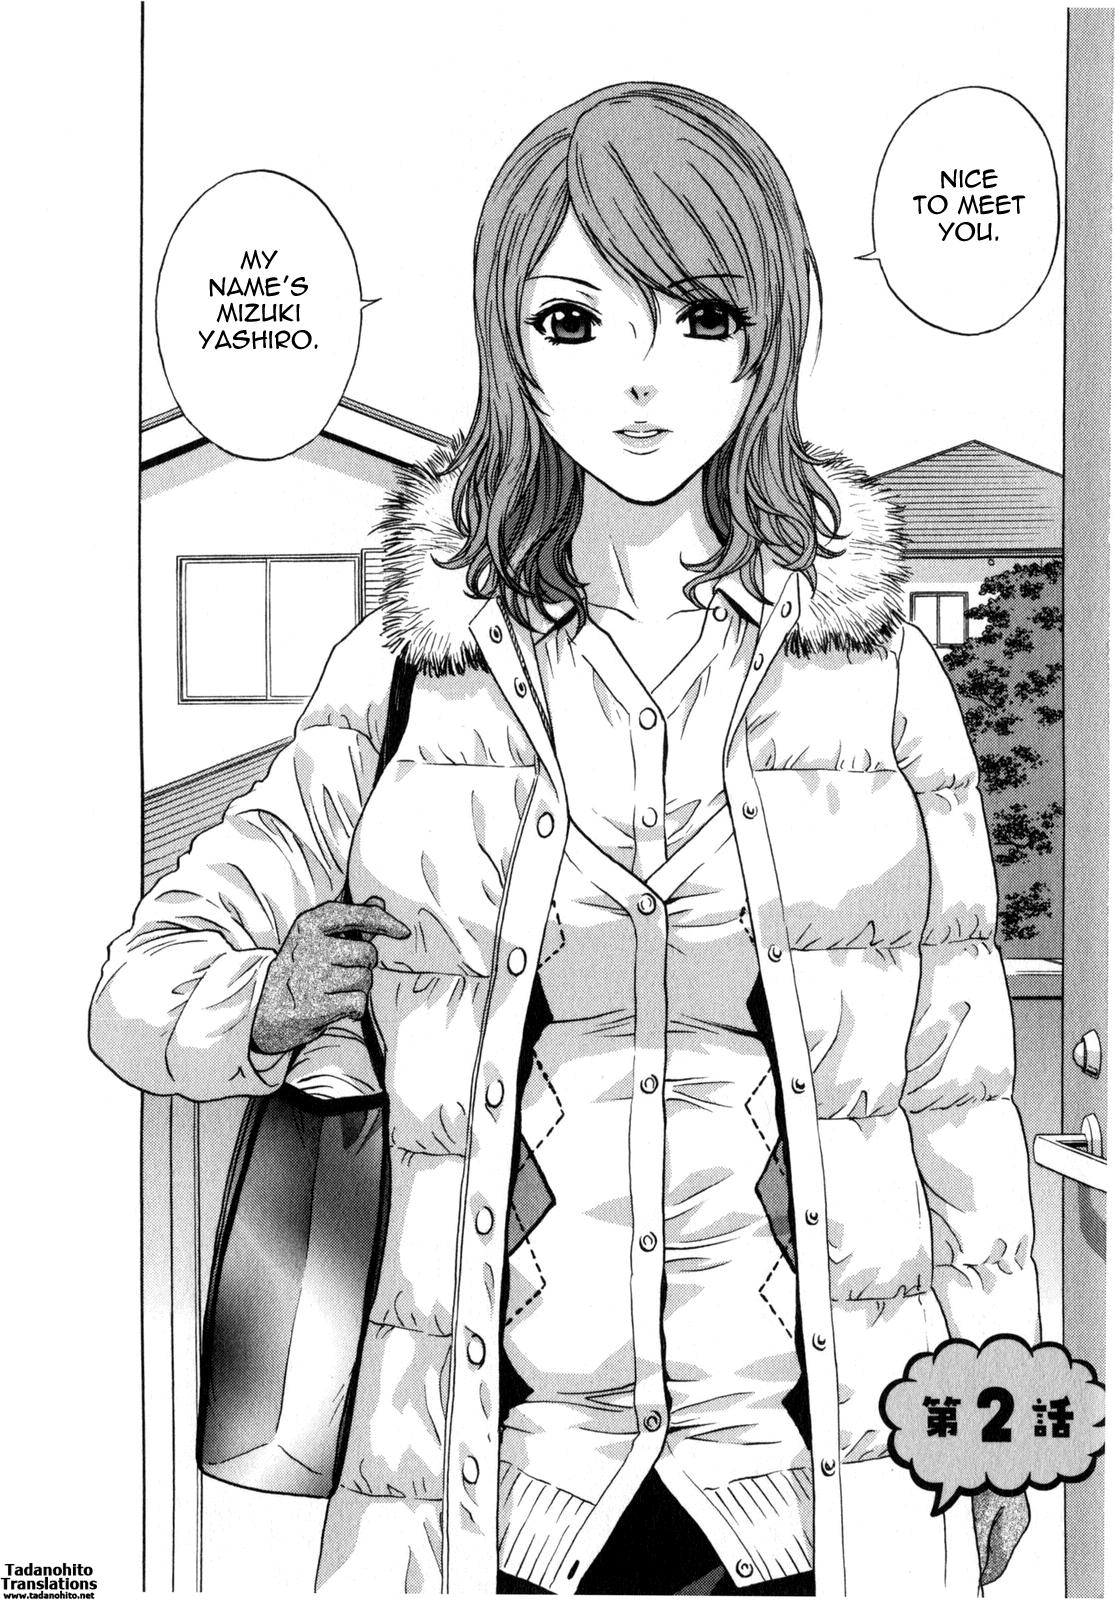 [Hidemaru] Life with Married Women Just Like a Manga 2 - Ch. 1-4 [English] {Tadanohito} 28